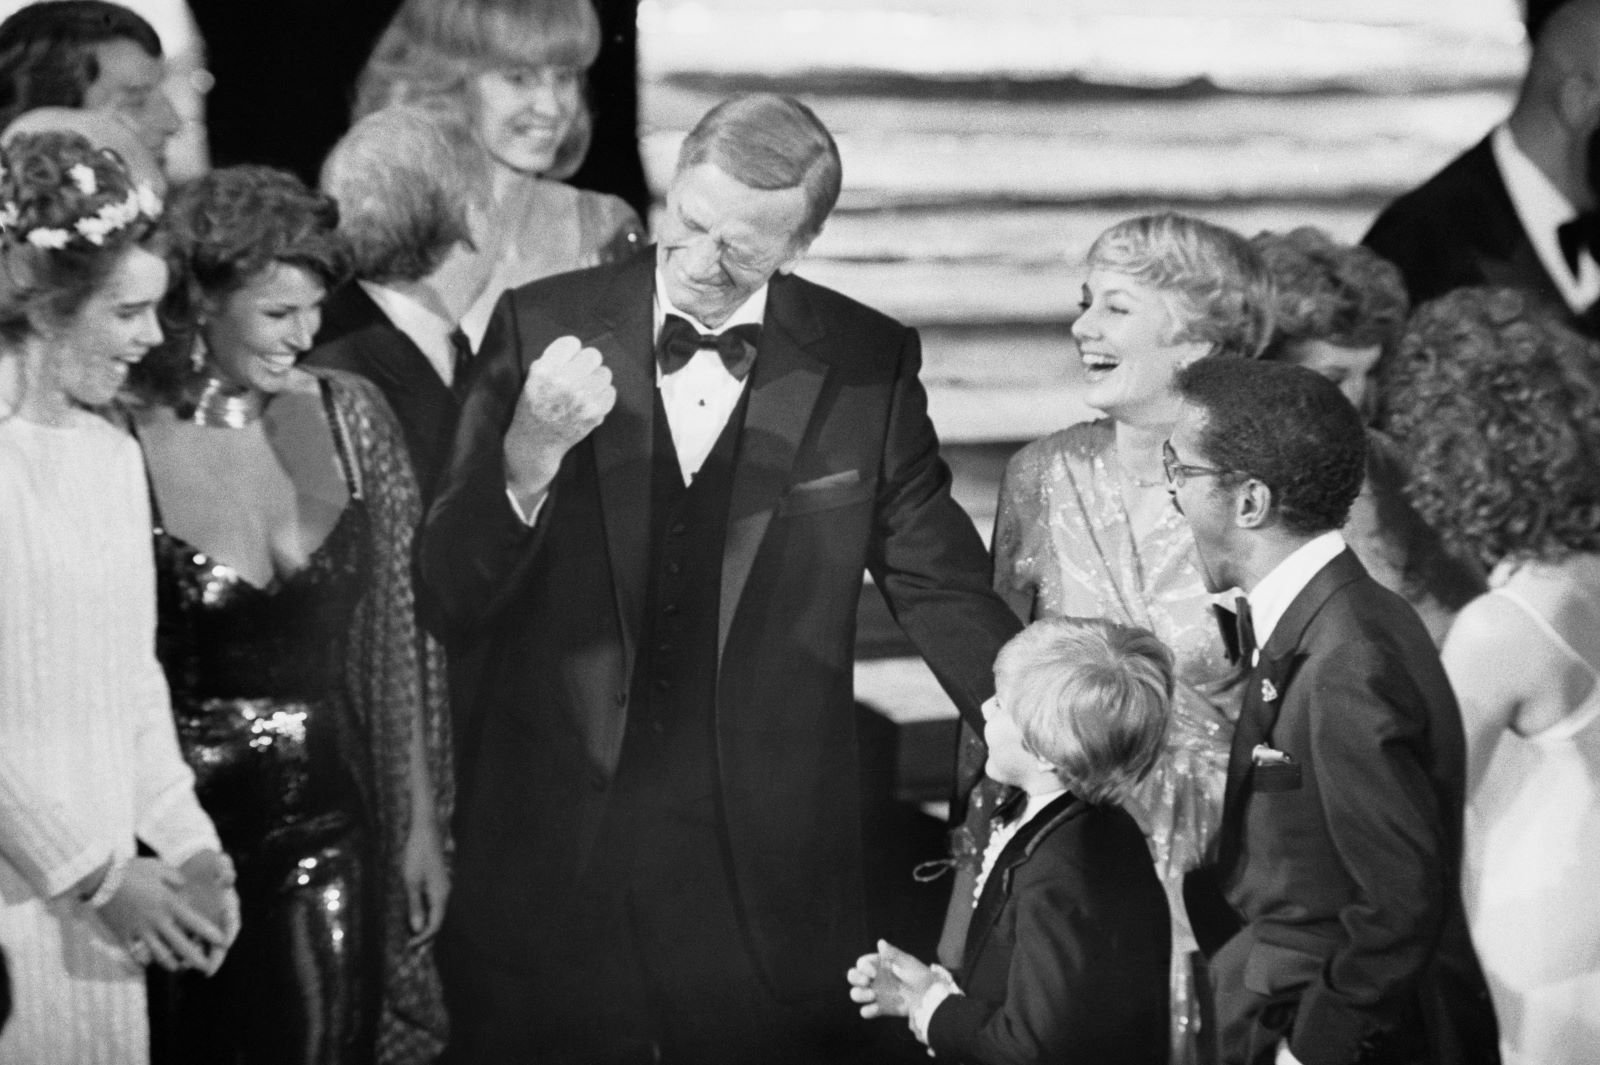 Oscar-winner John Wayne poses with fellow actors at the Academy Awards